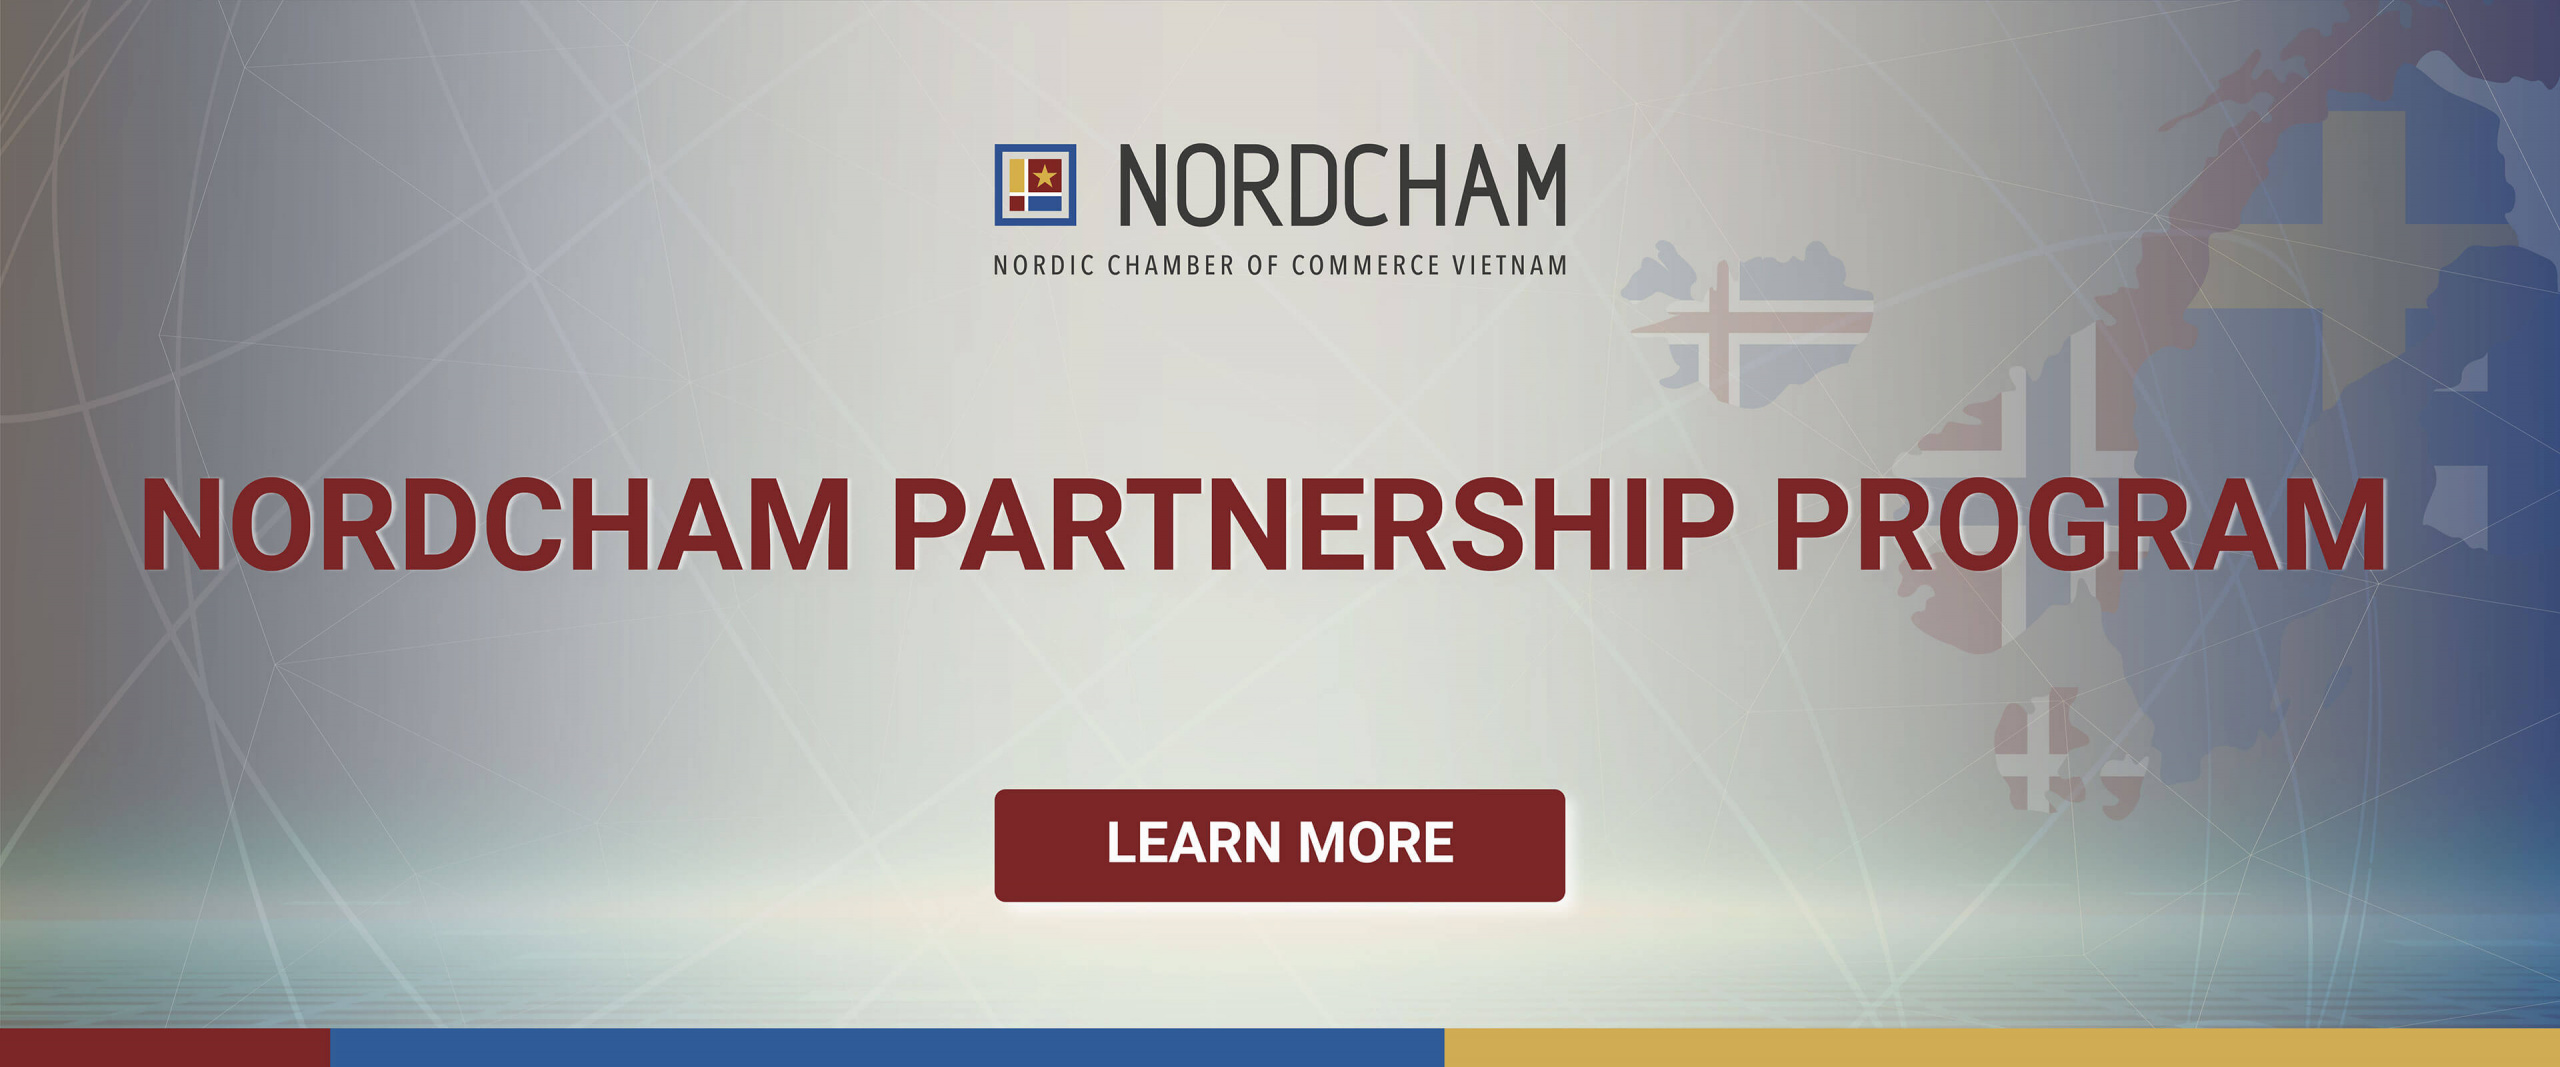 Nordcharm homepage